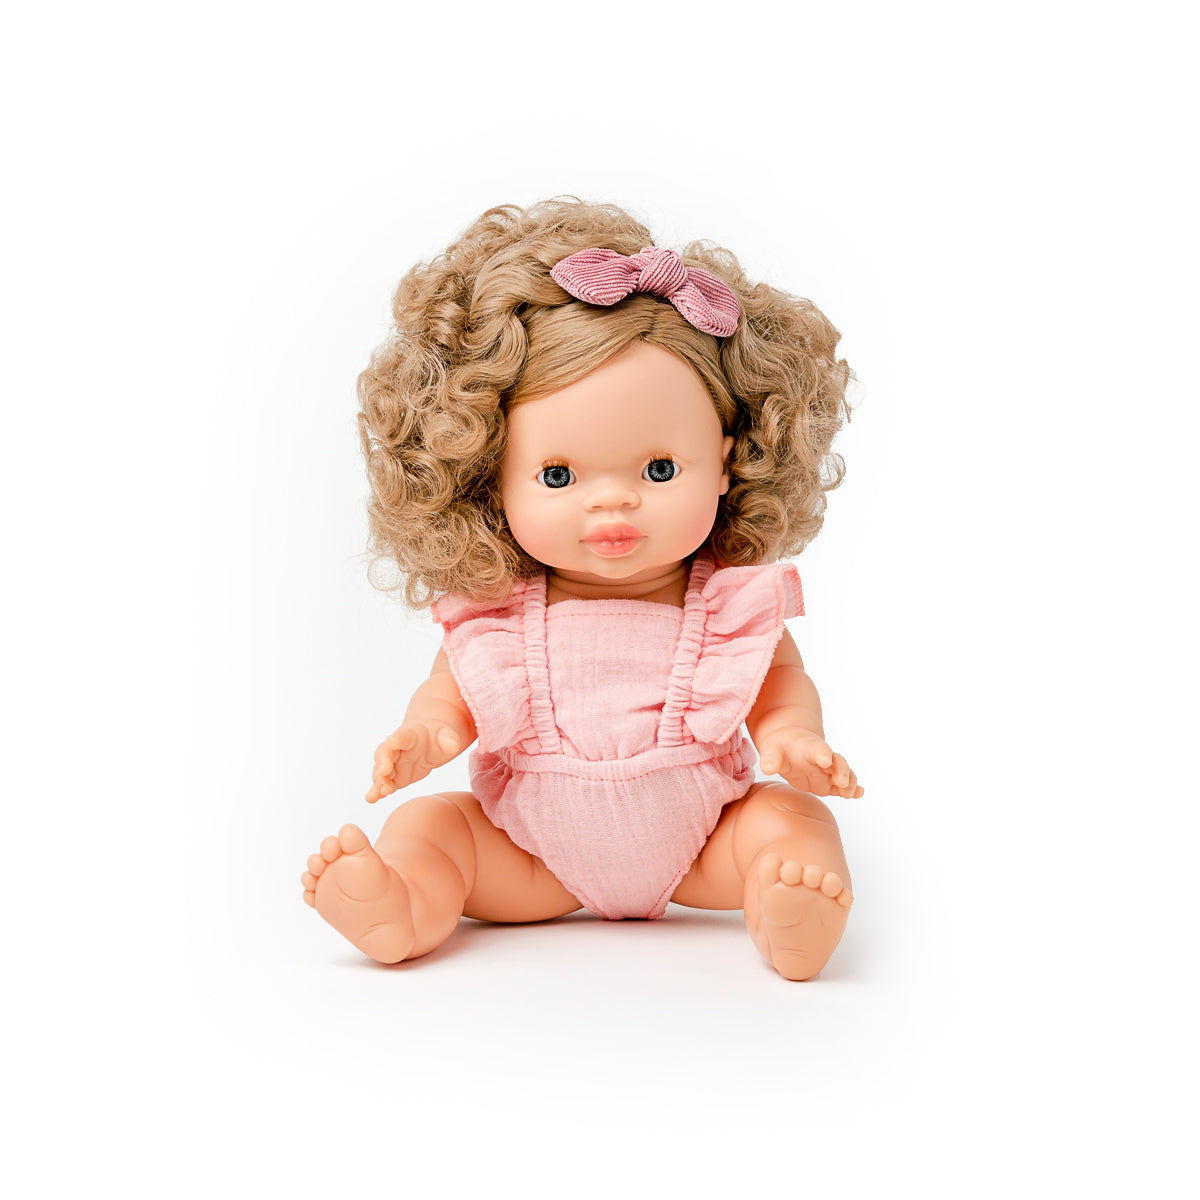 Doll Clothing - Flutter Romper in Pink